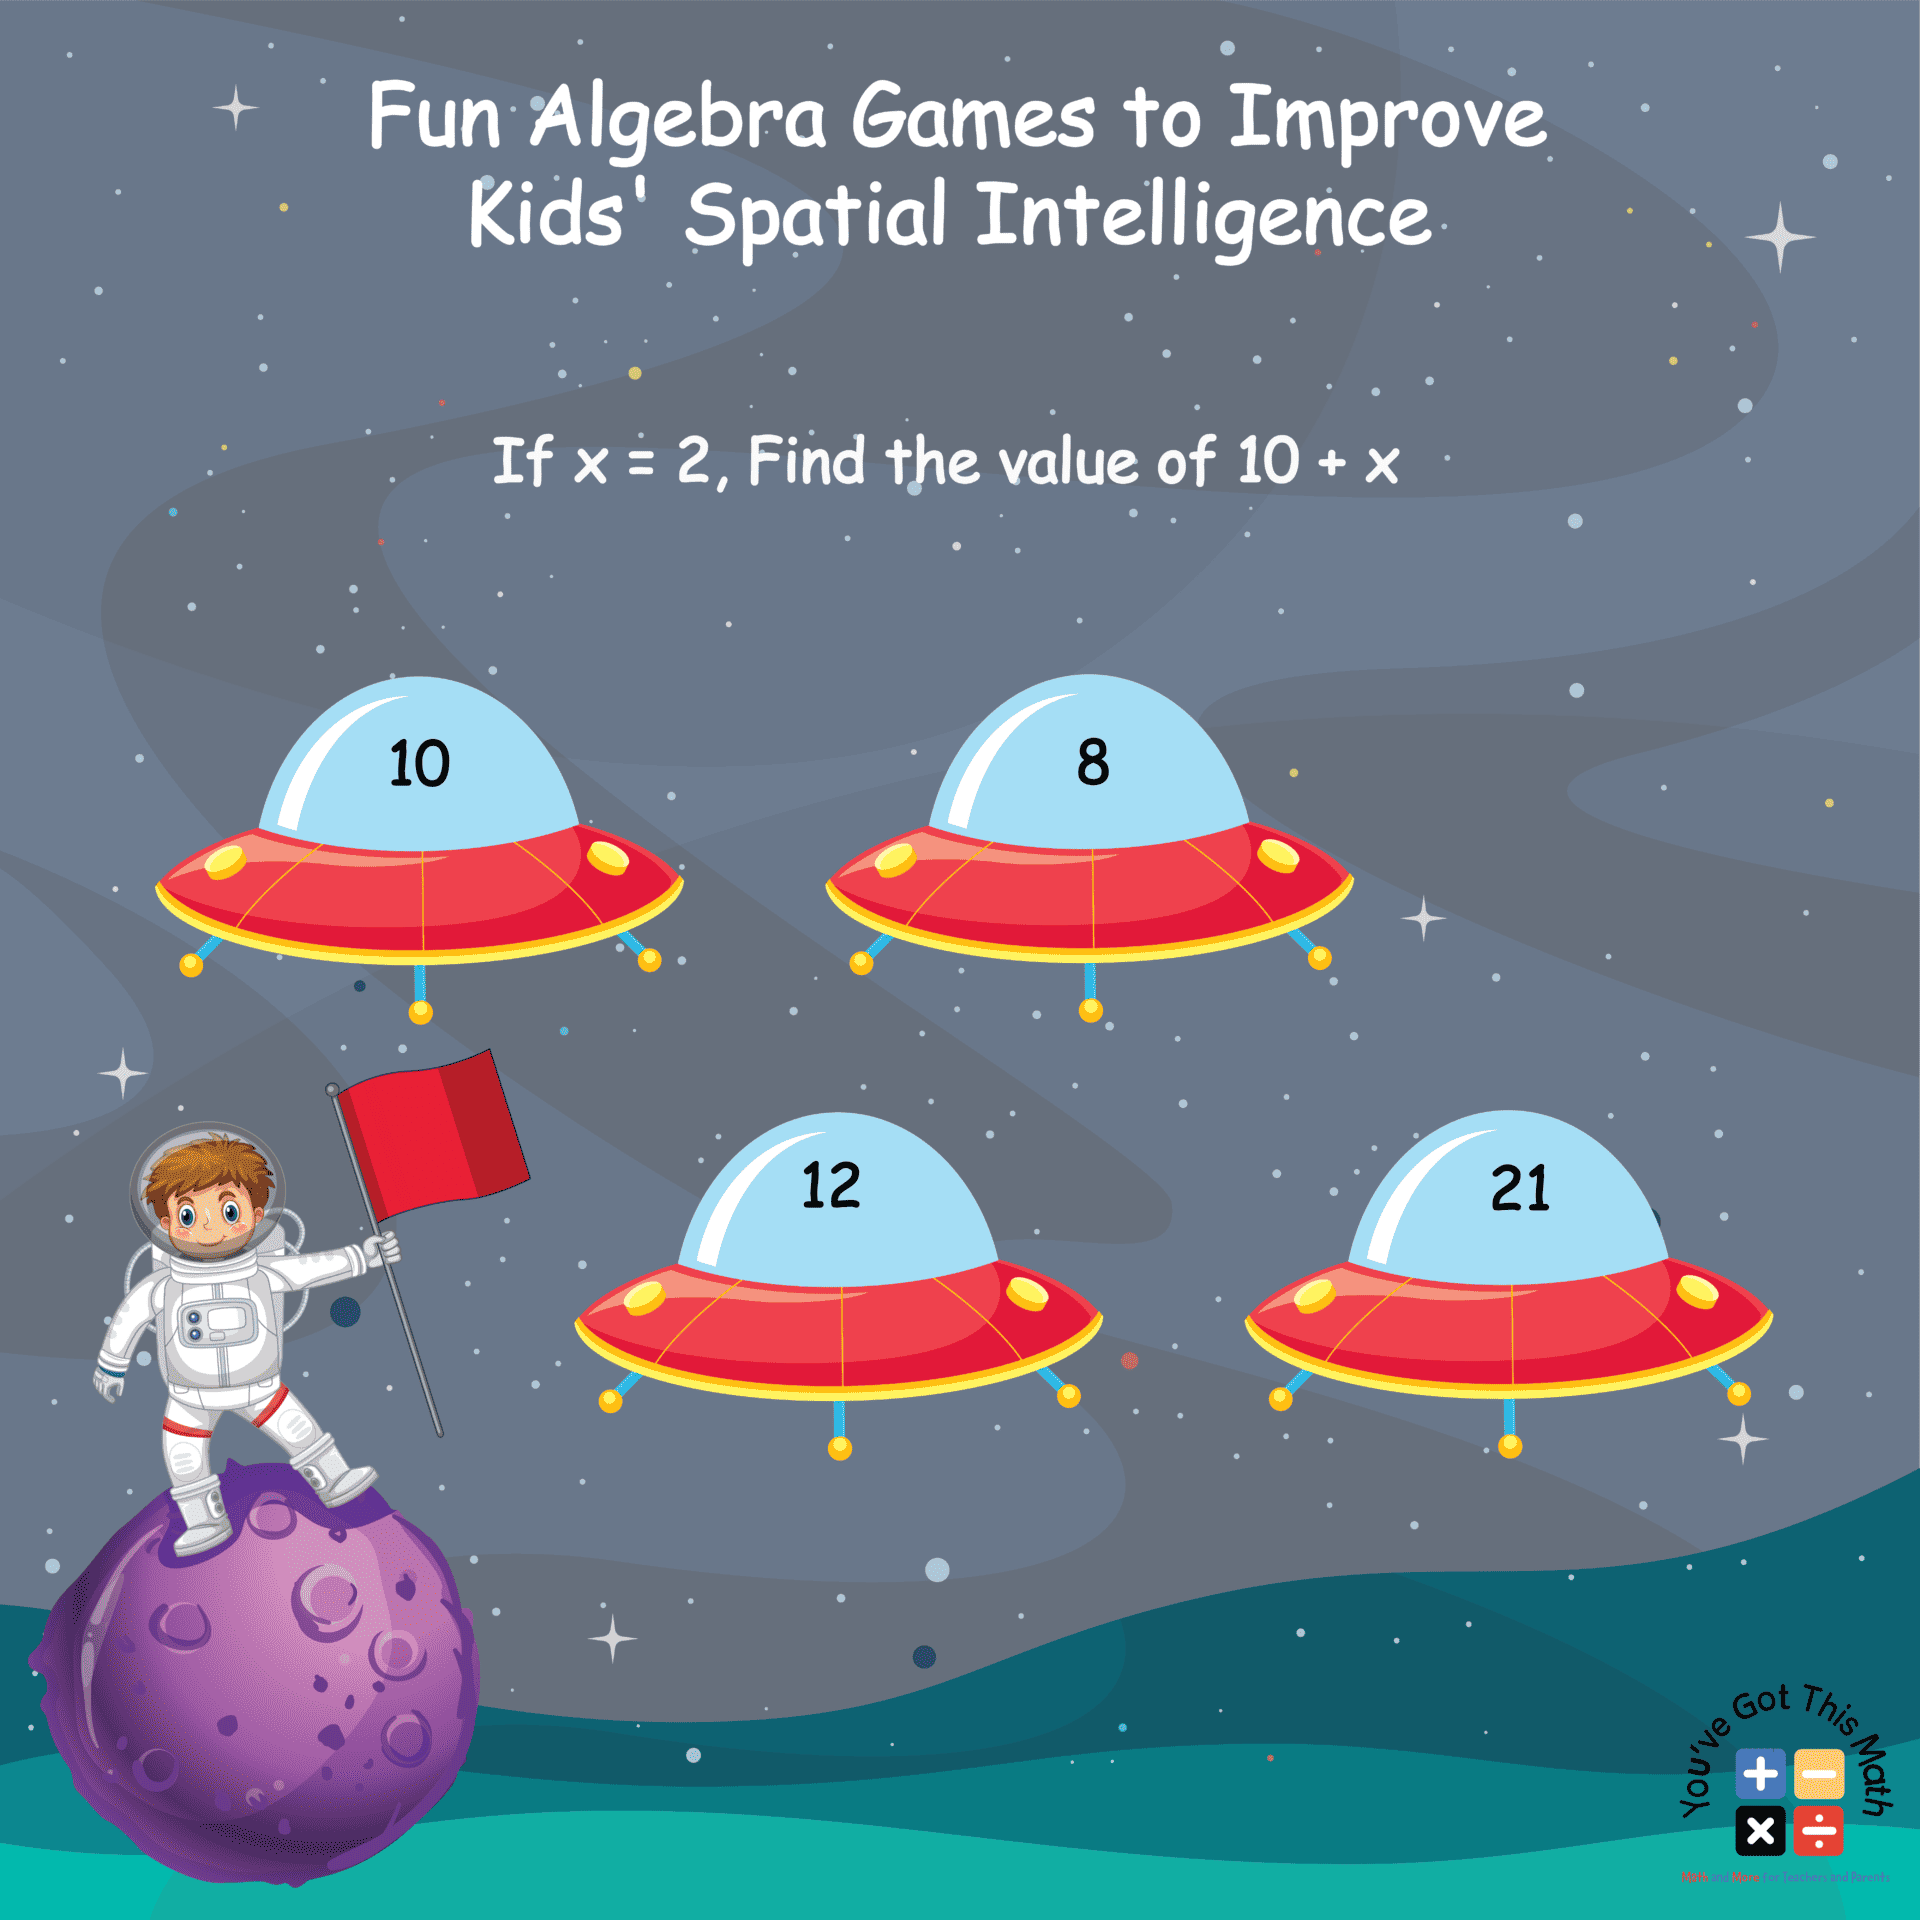 Fun Algebra Games to Improve Kids' Spatial Intelligence